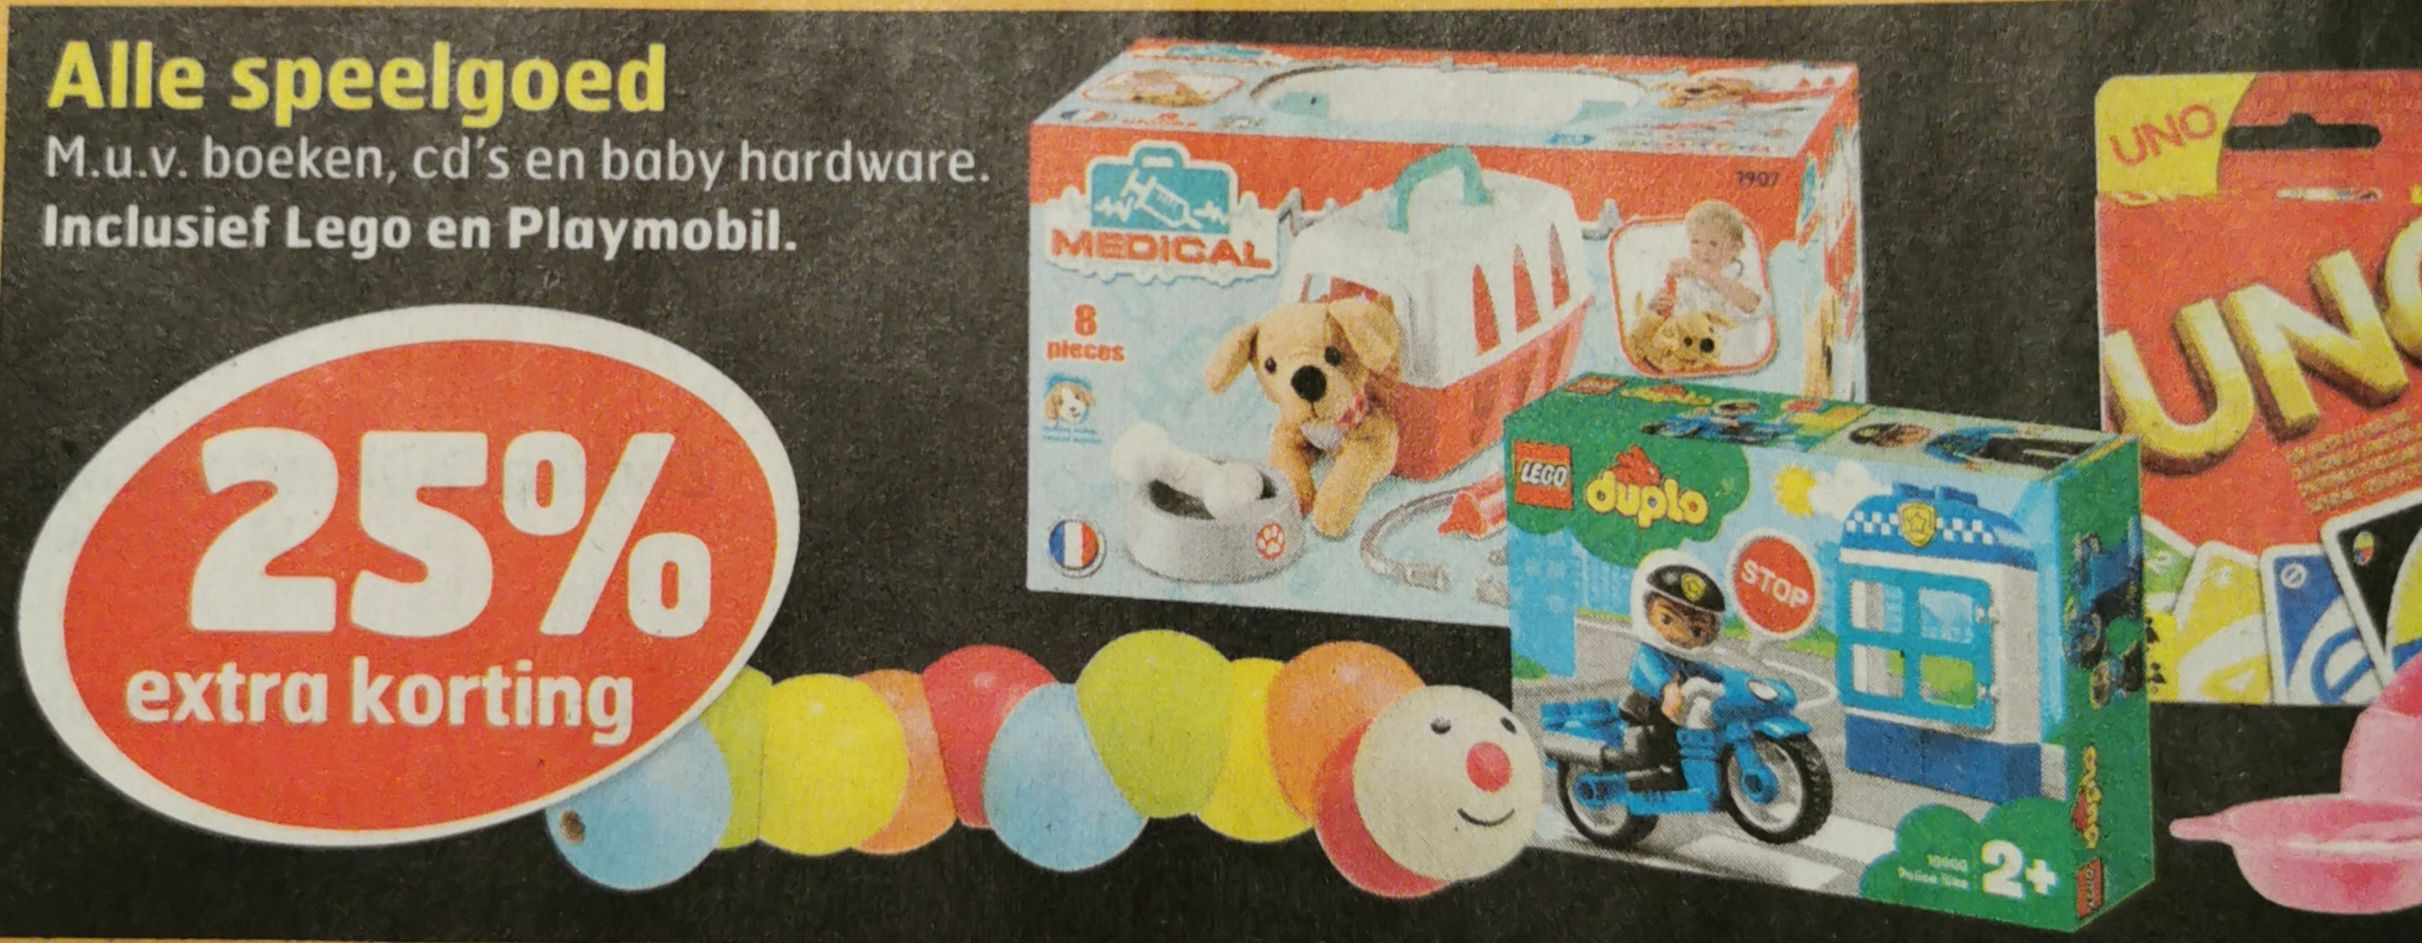 25% extra korting op alle speelgoed, inclusief Playmobil @Trekpleister - Pepper.com